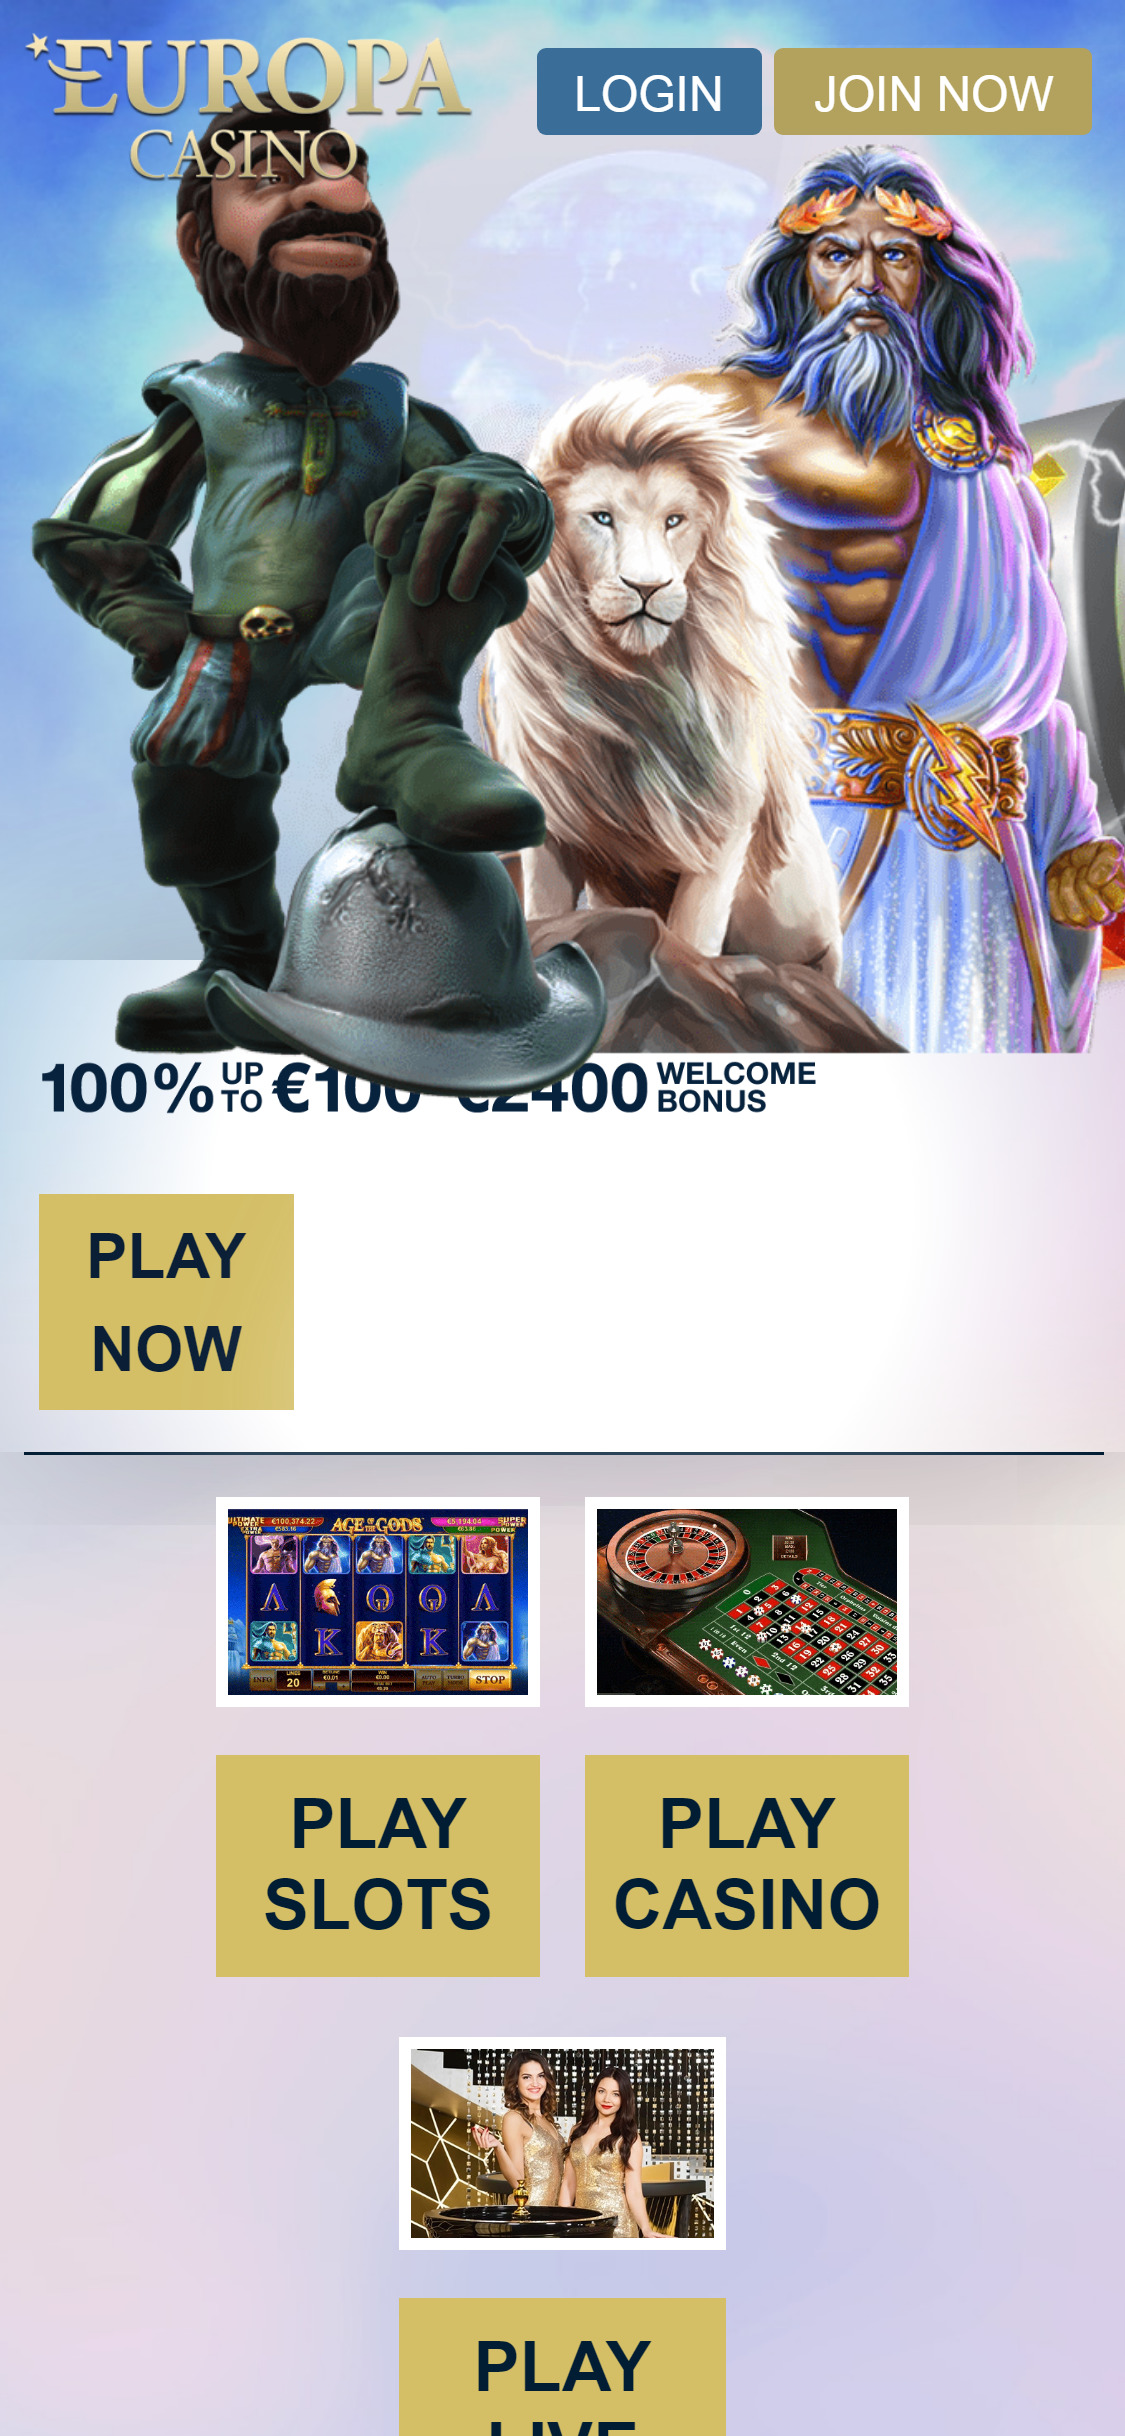 Europa Casino Mobile Review